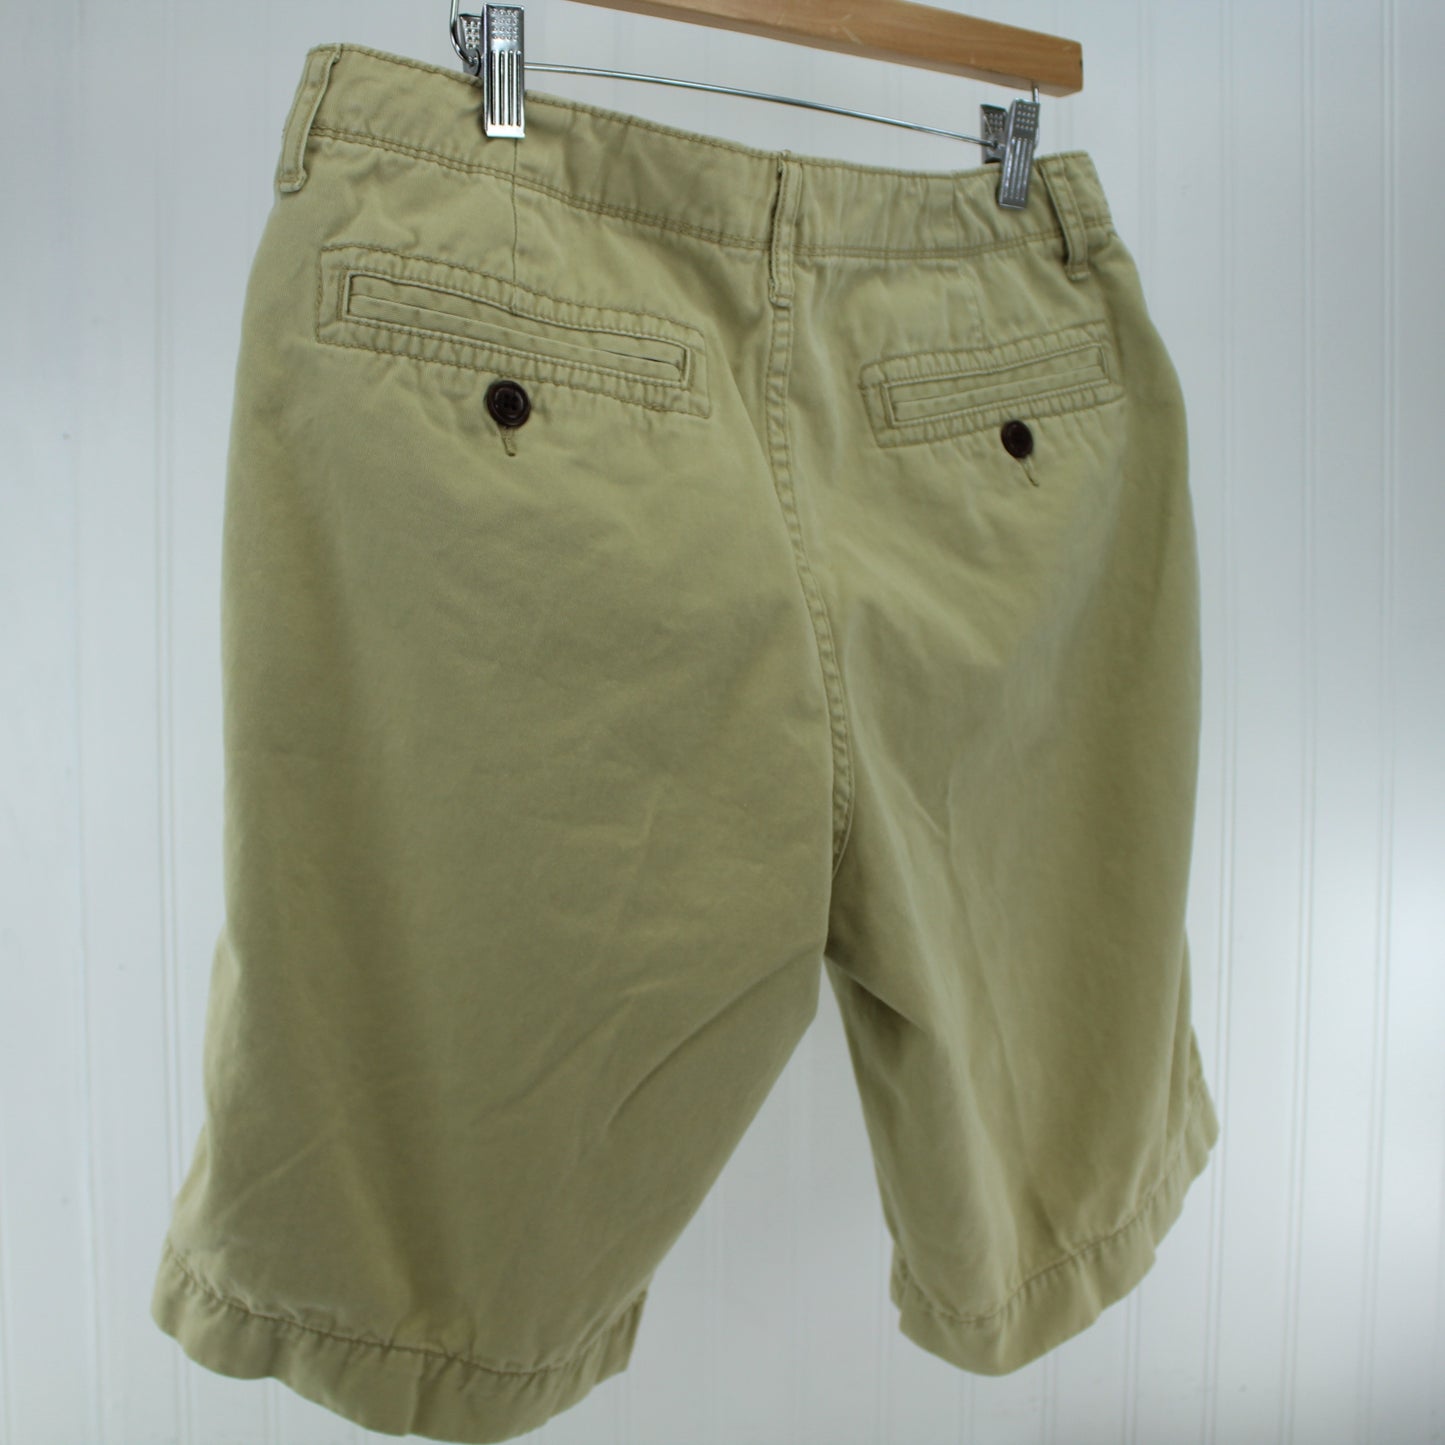 Arizona 100% Cotton Khaki Short Pants Watch Pocket Design Size 32 Inseam 9" durable heavy cotton